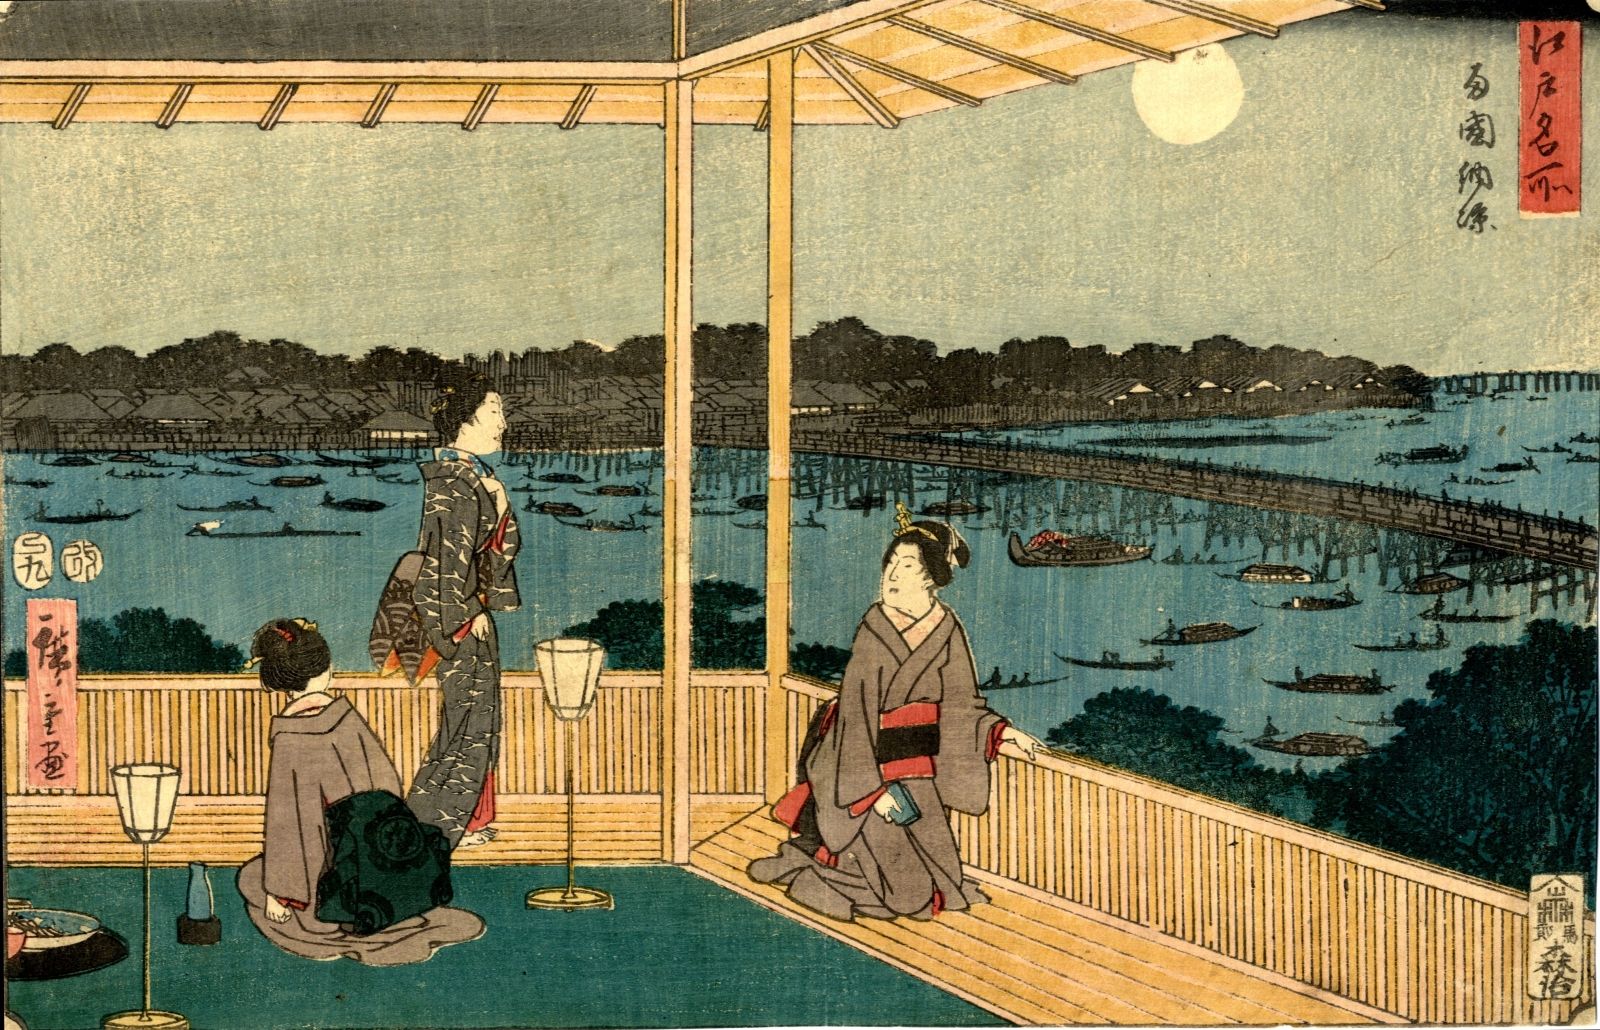 Hiroshige, Utagawa 1797-1858 Oban yokoe, dat. 1857 Aus der Serie "Edo meisho" (B&hellip;